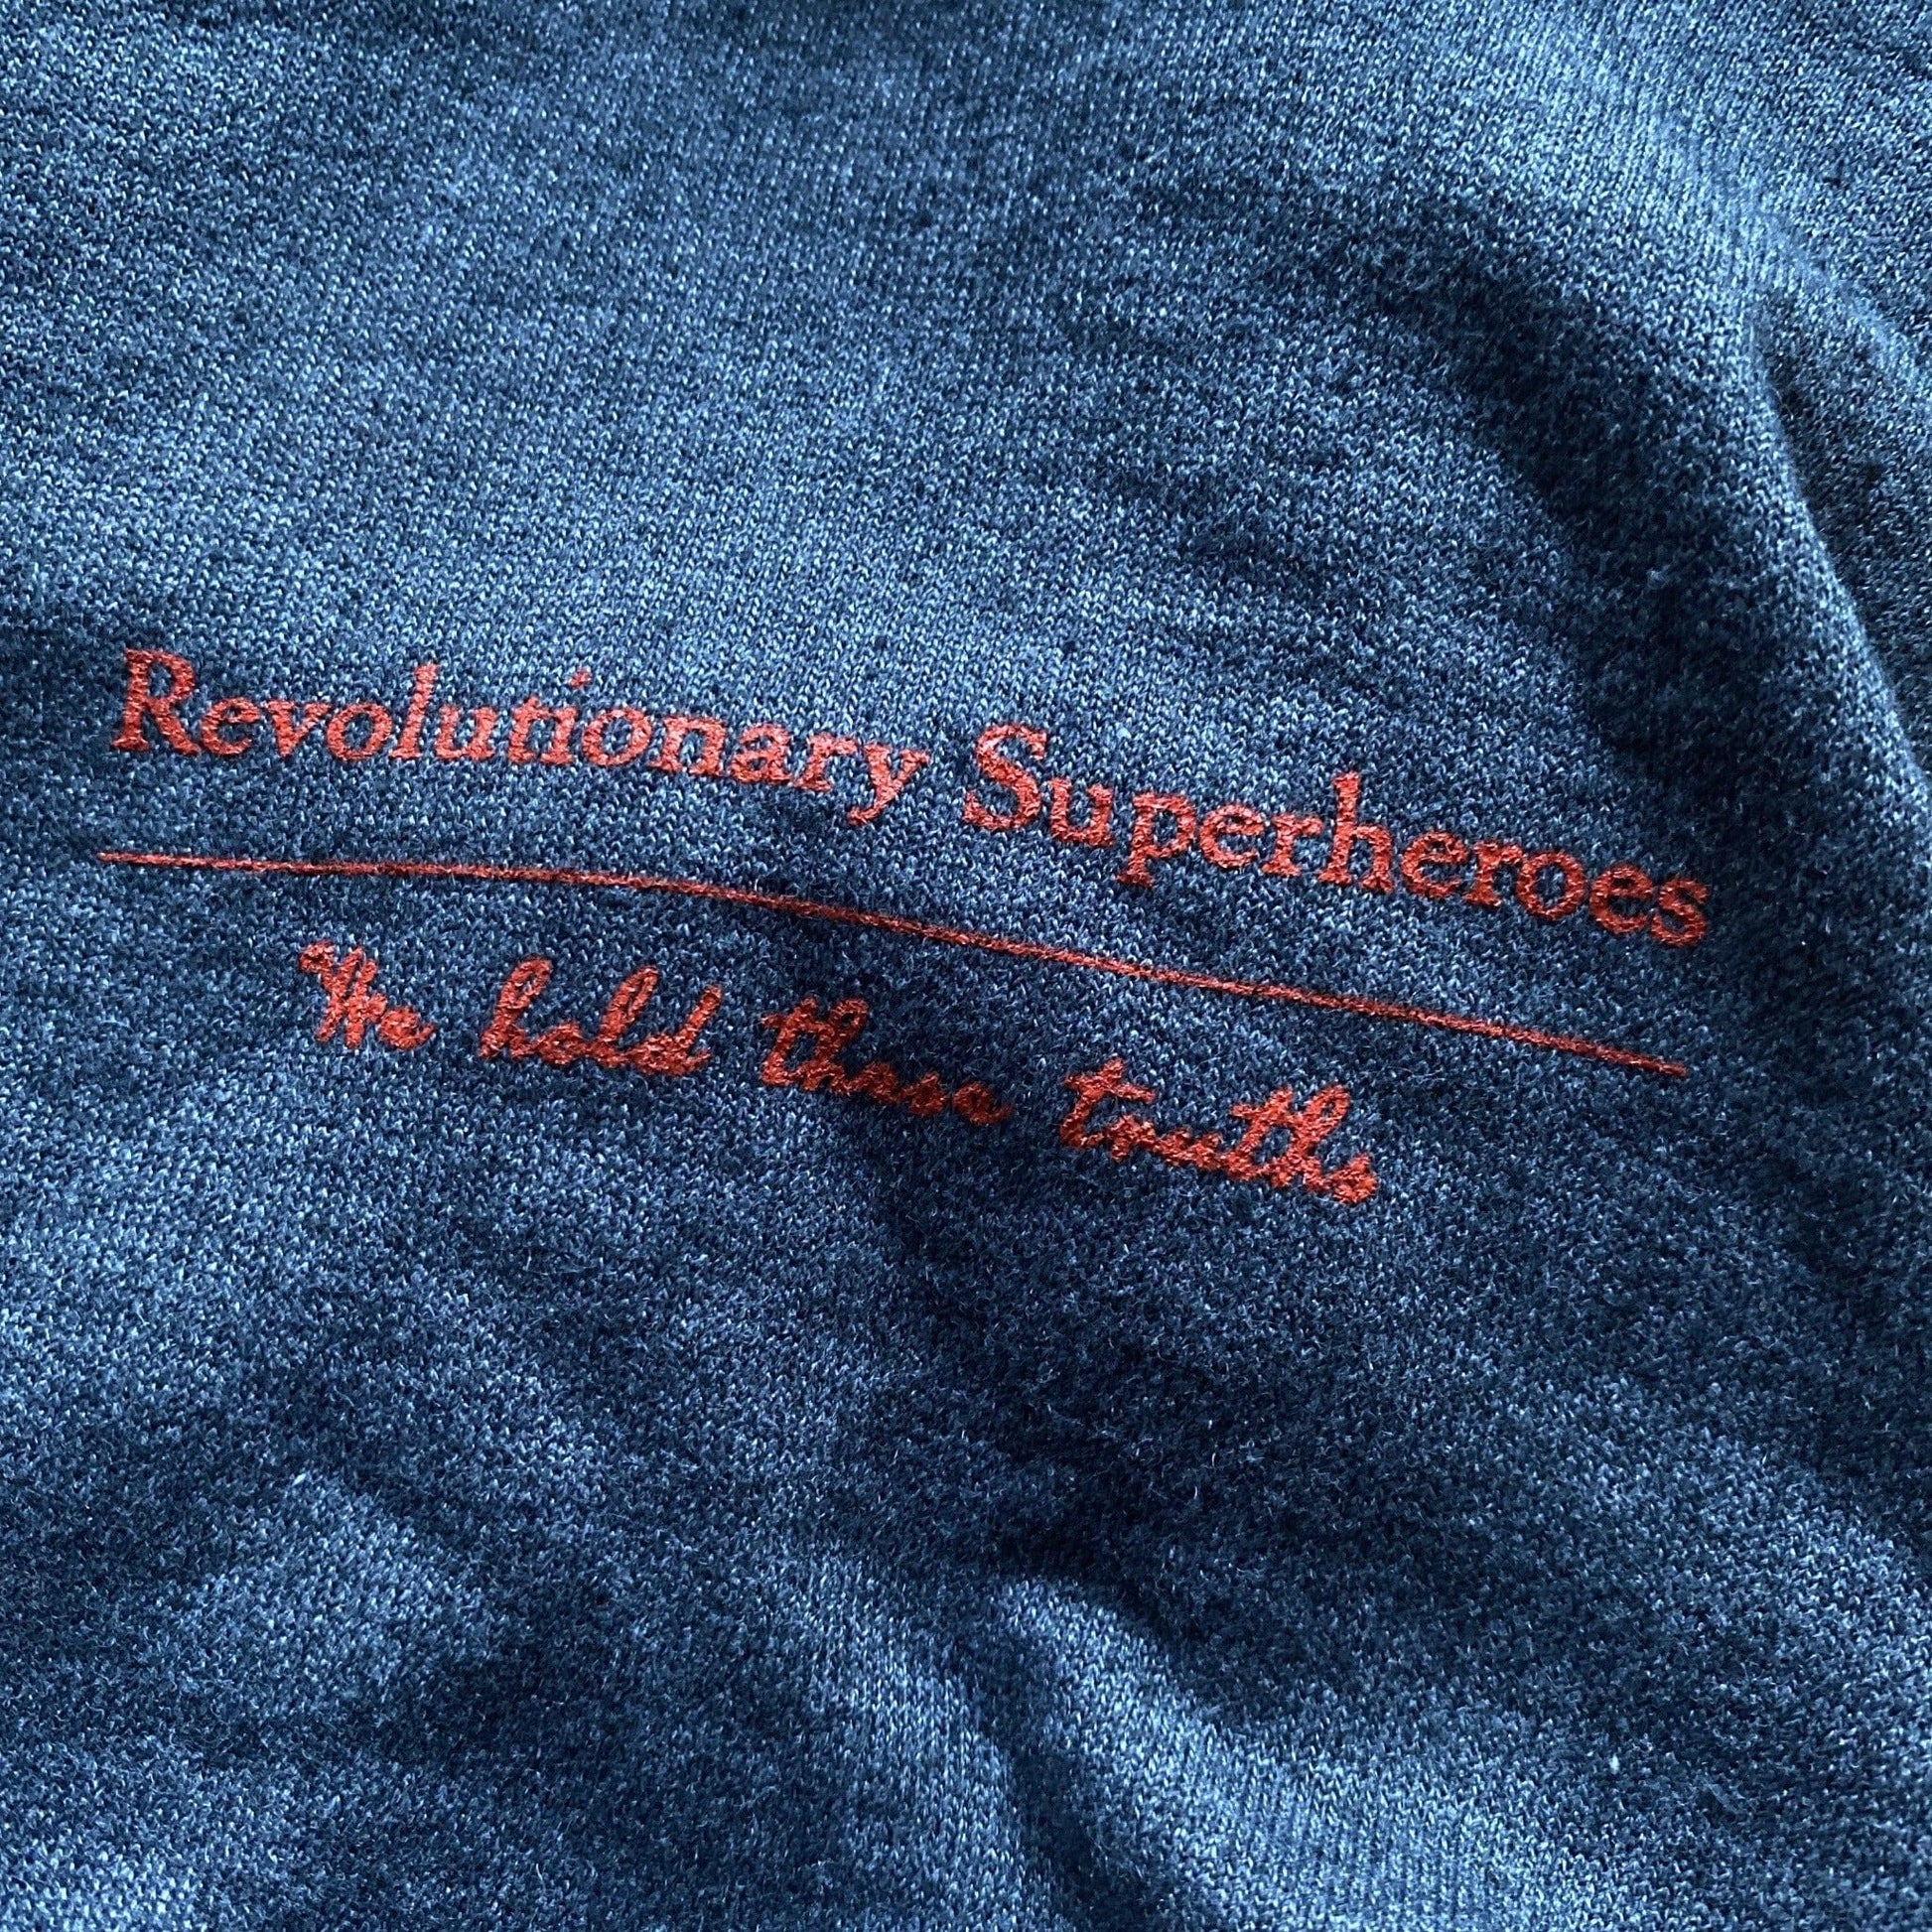 Sleeve Print on Charcoal Ten "Revolutionary Superheroes" Hoodie and crewneck sweatshirt from the History List Store